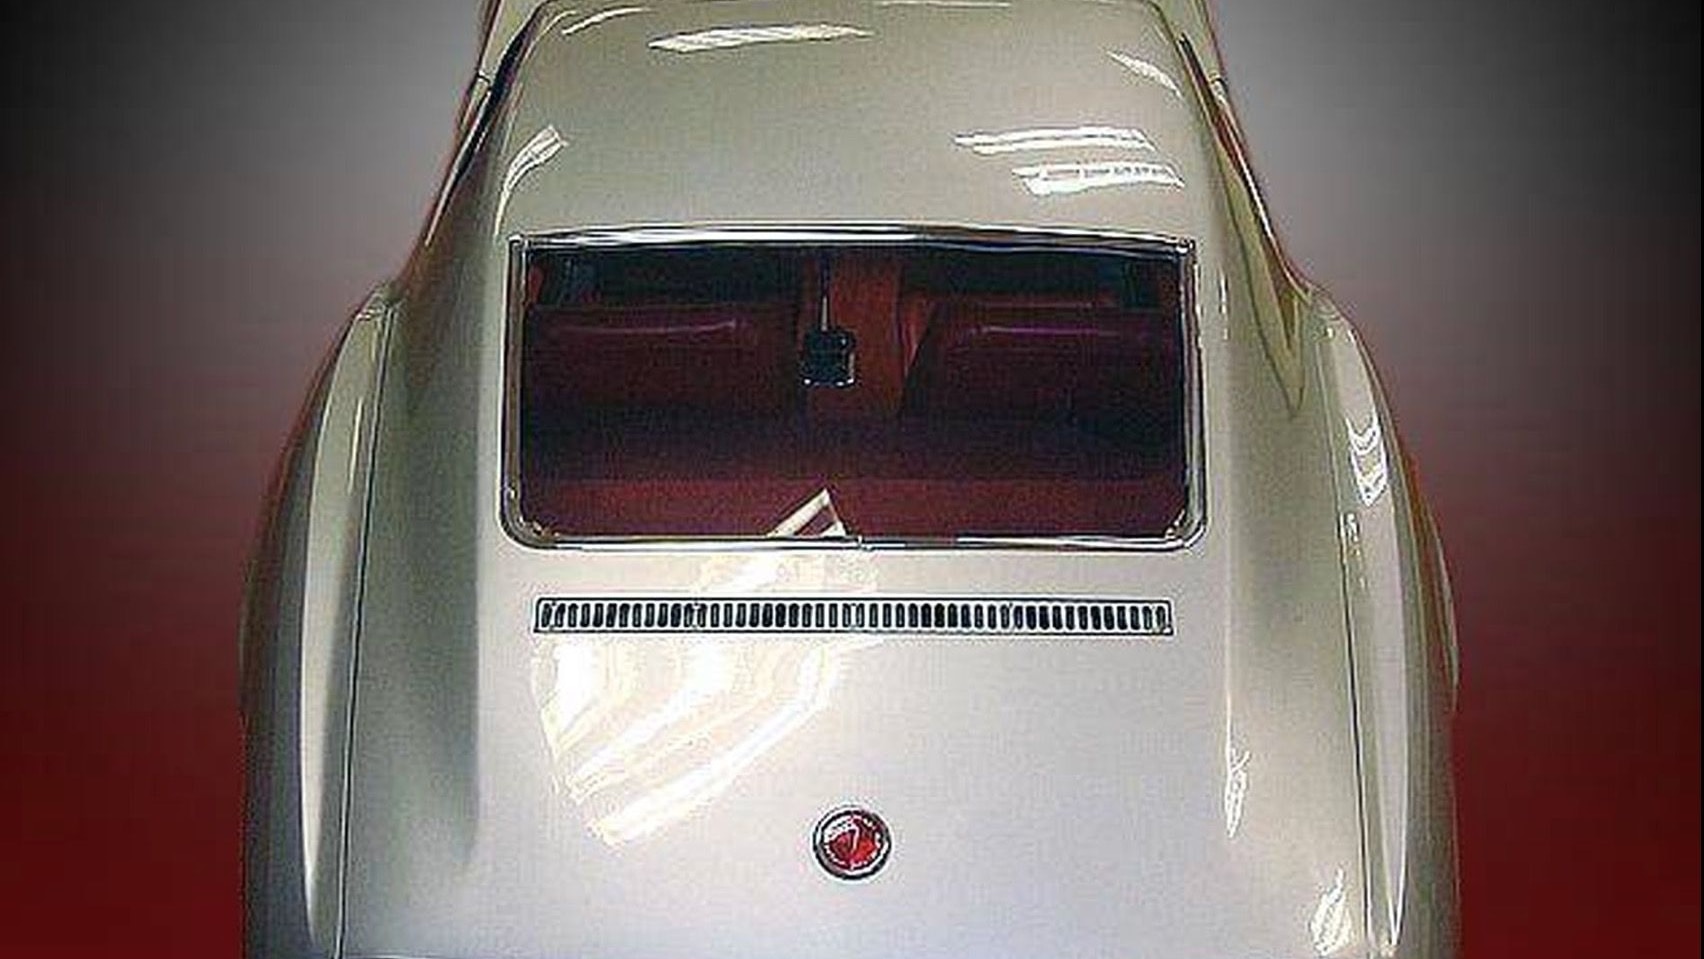 Pontiac Banshee coupe (image via Hemmings)